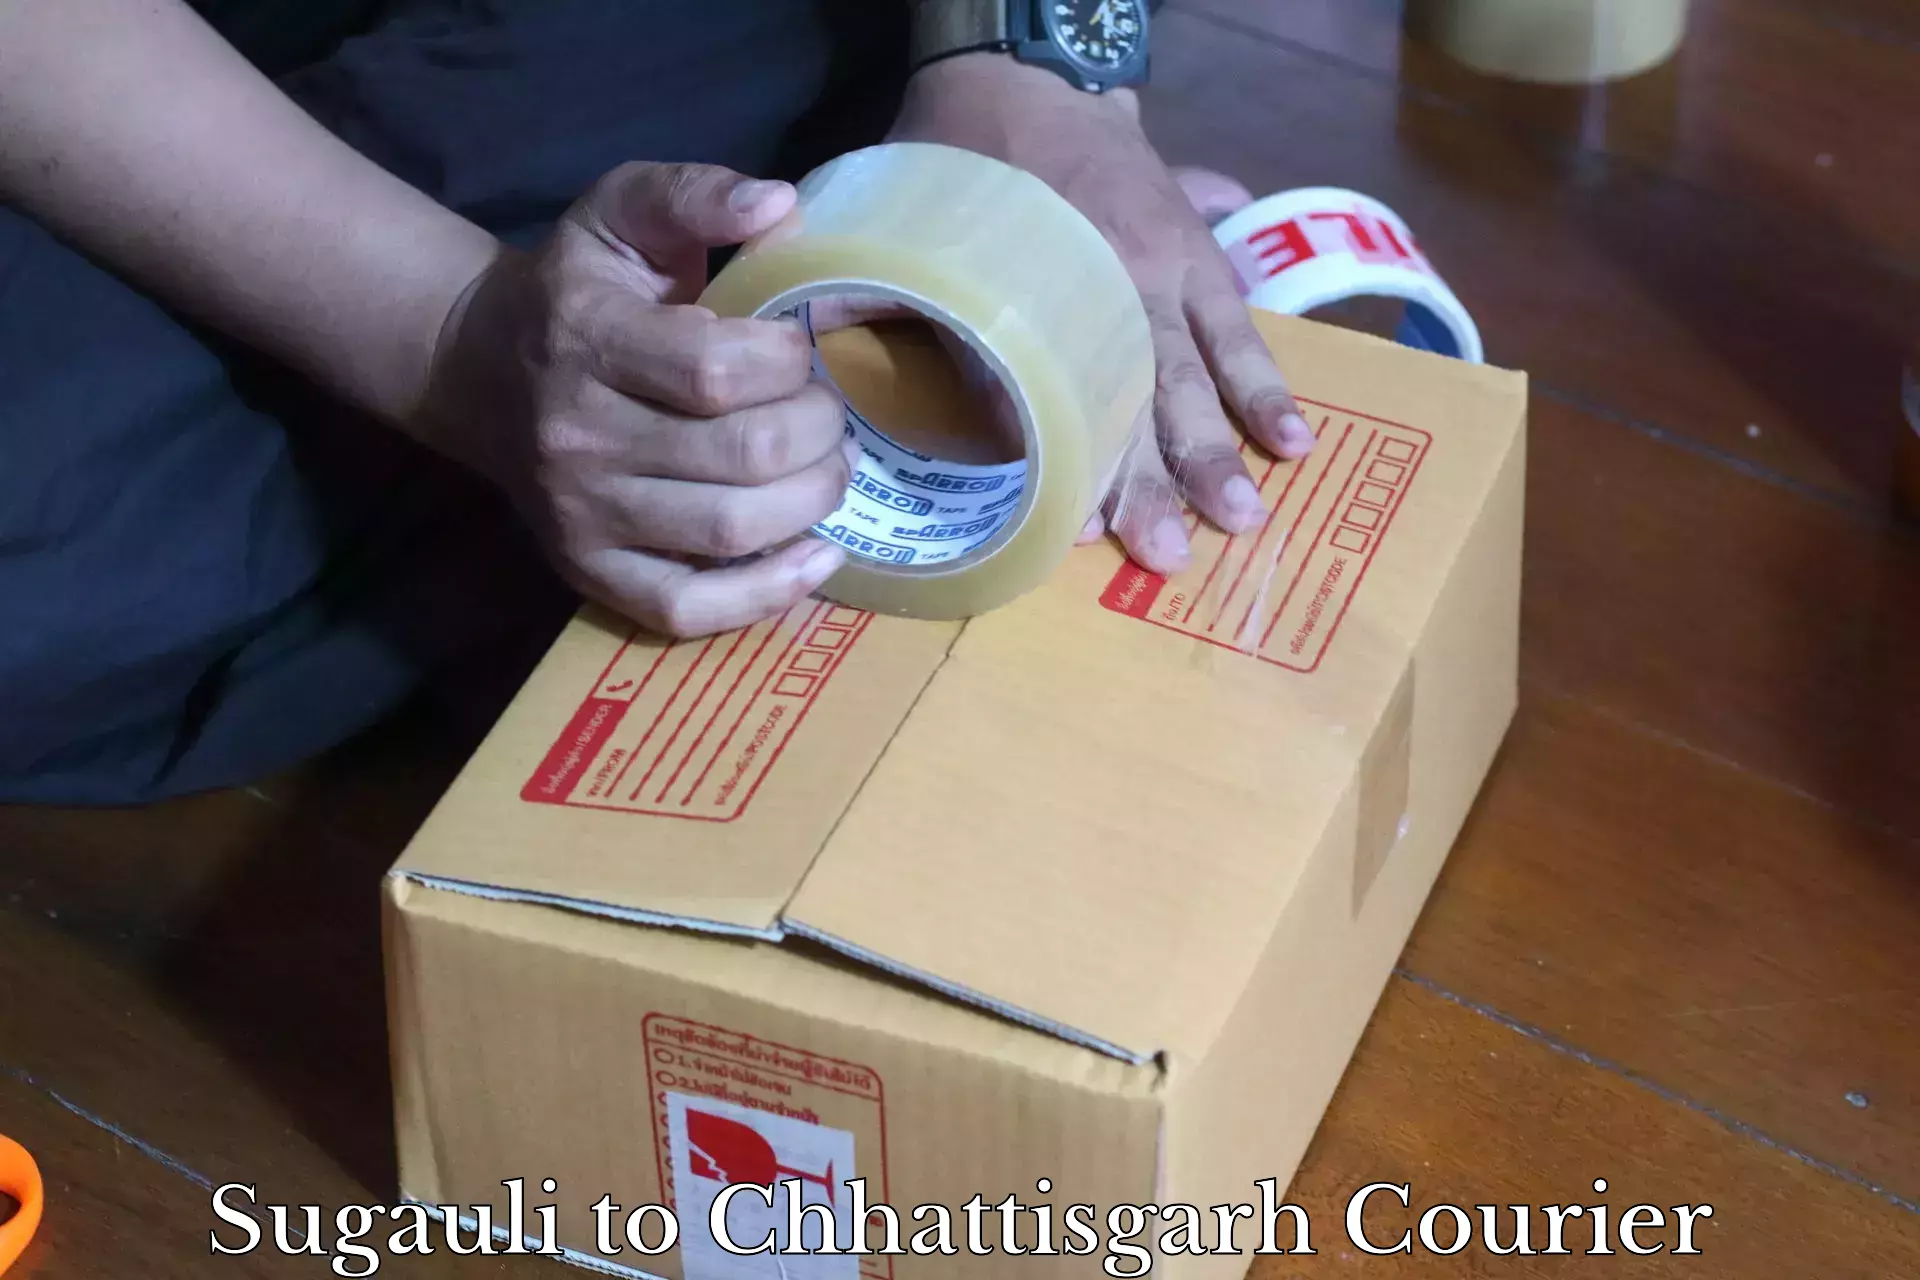 Courier service efficiency Sugauli to Chhattisgarh